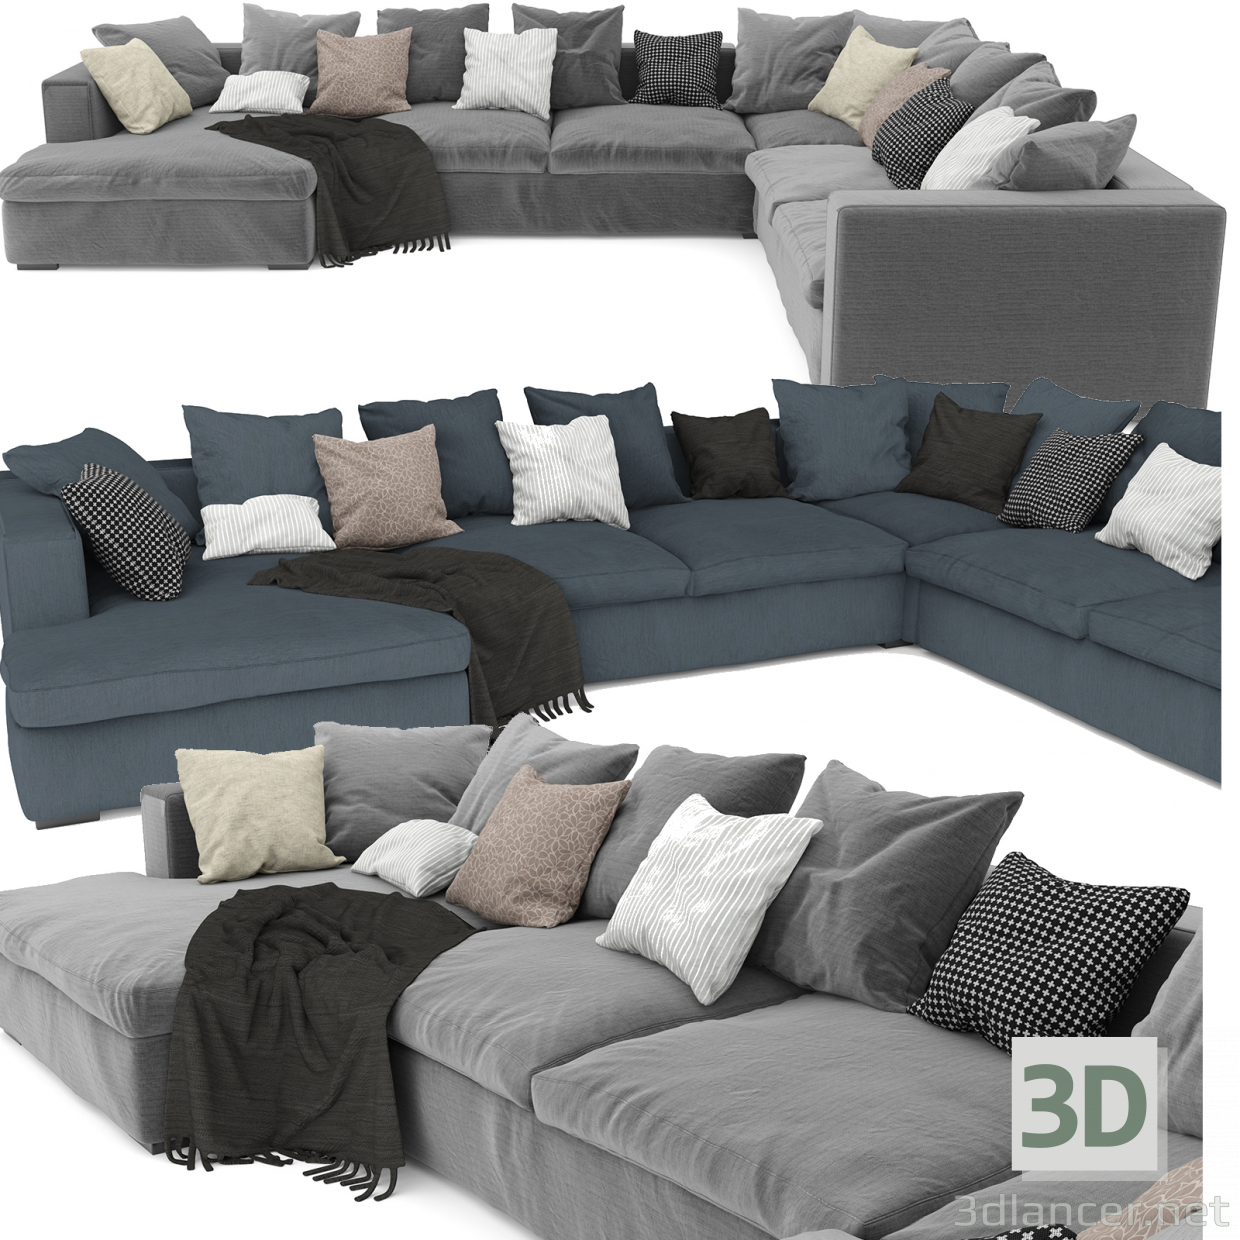 Cenova Sofa 3D-Modell kaufen - Rendern